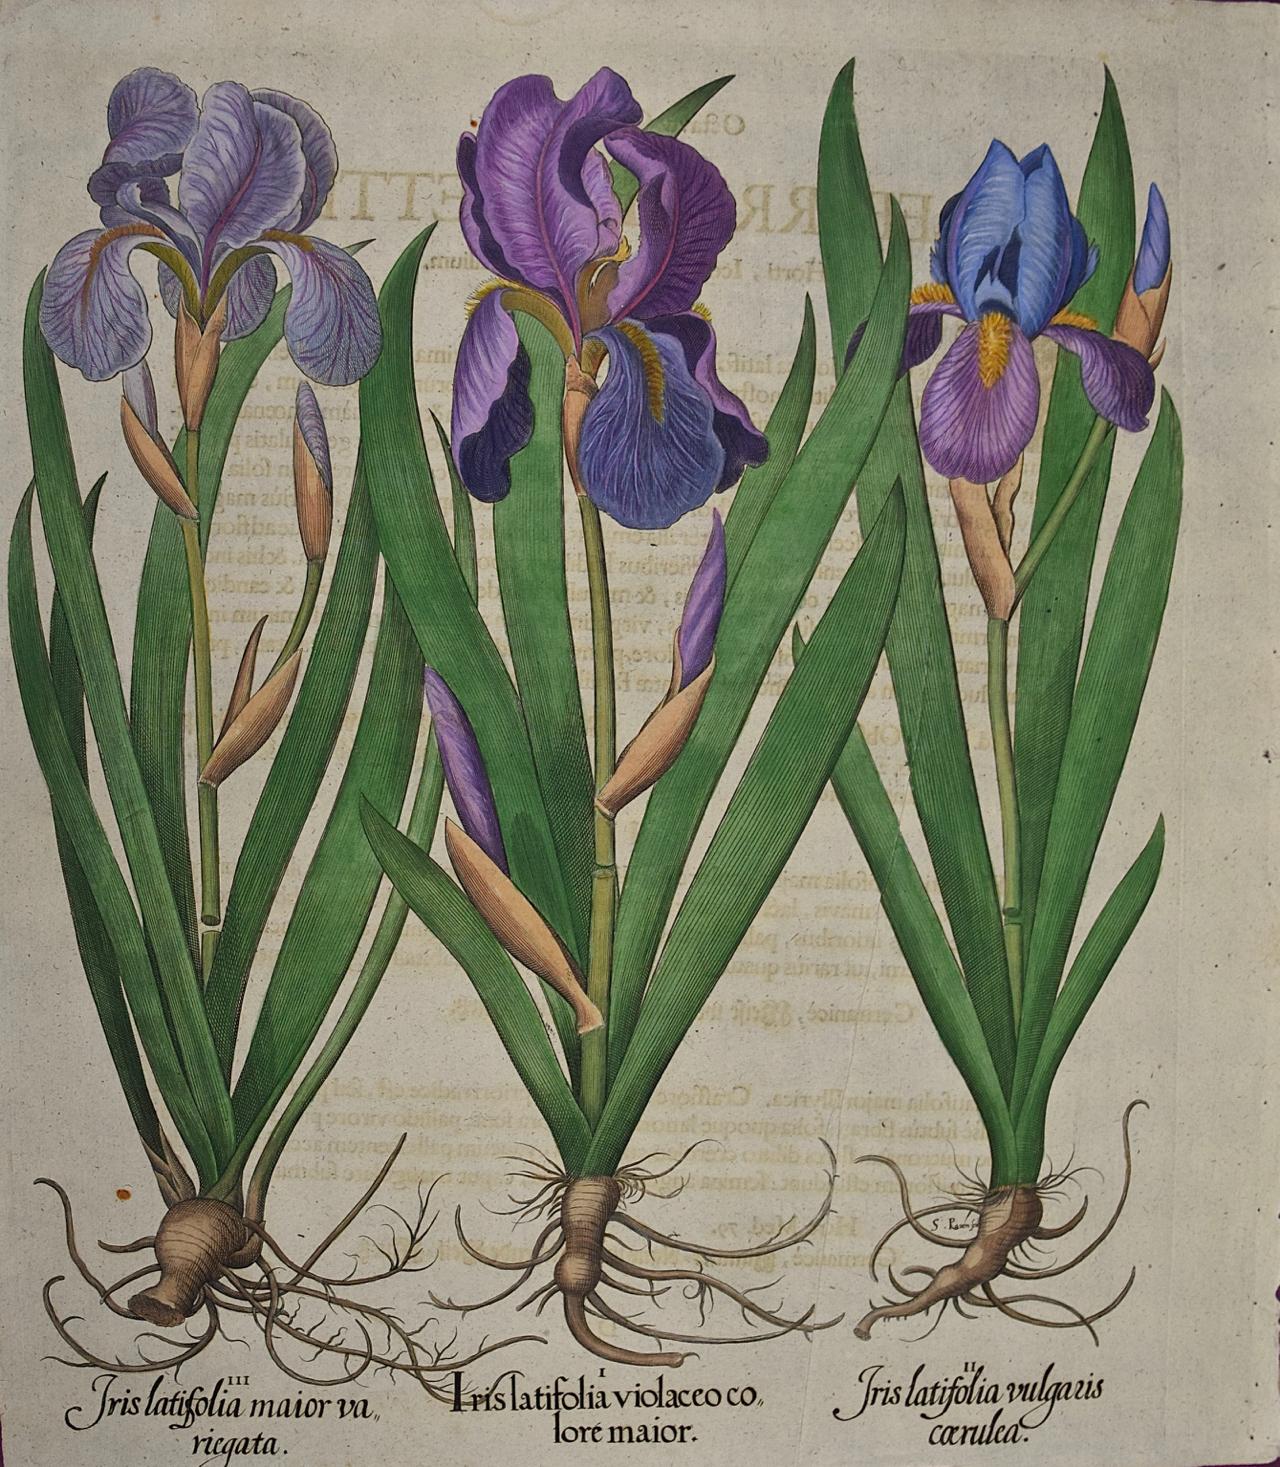 Flowering Iris Plants: A Basilius Besler Hand-colored Botanical Engraving